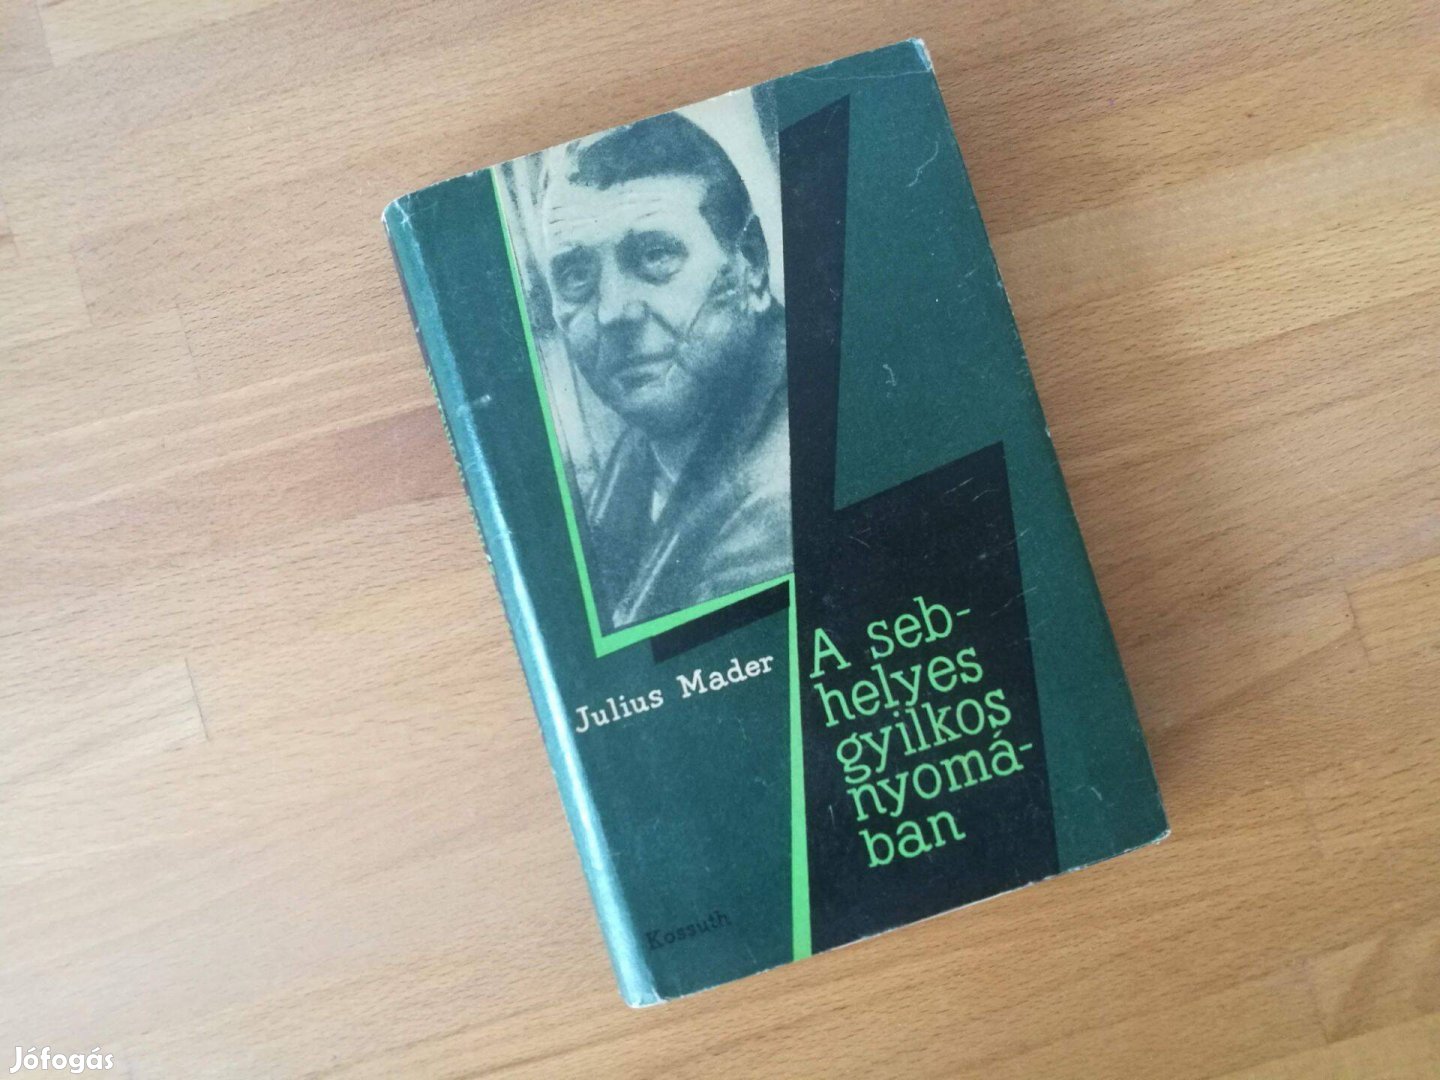 Julius Mader: A sebhelyes gyilkos nyomában (Kossuth Kiadó 1963)